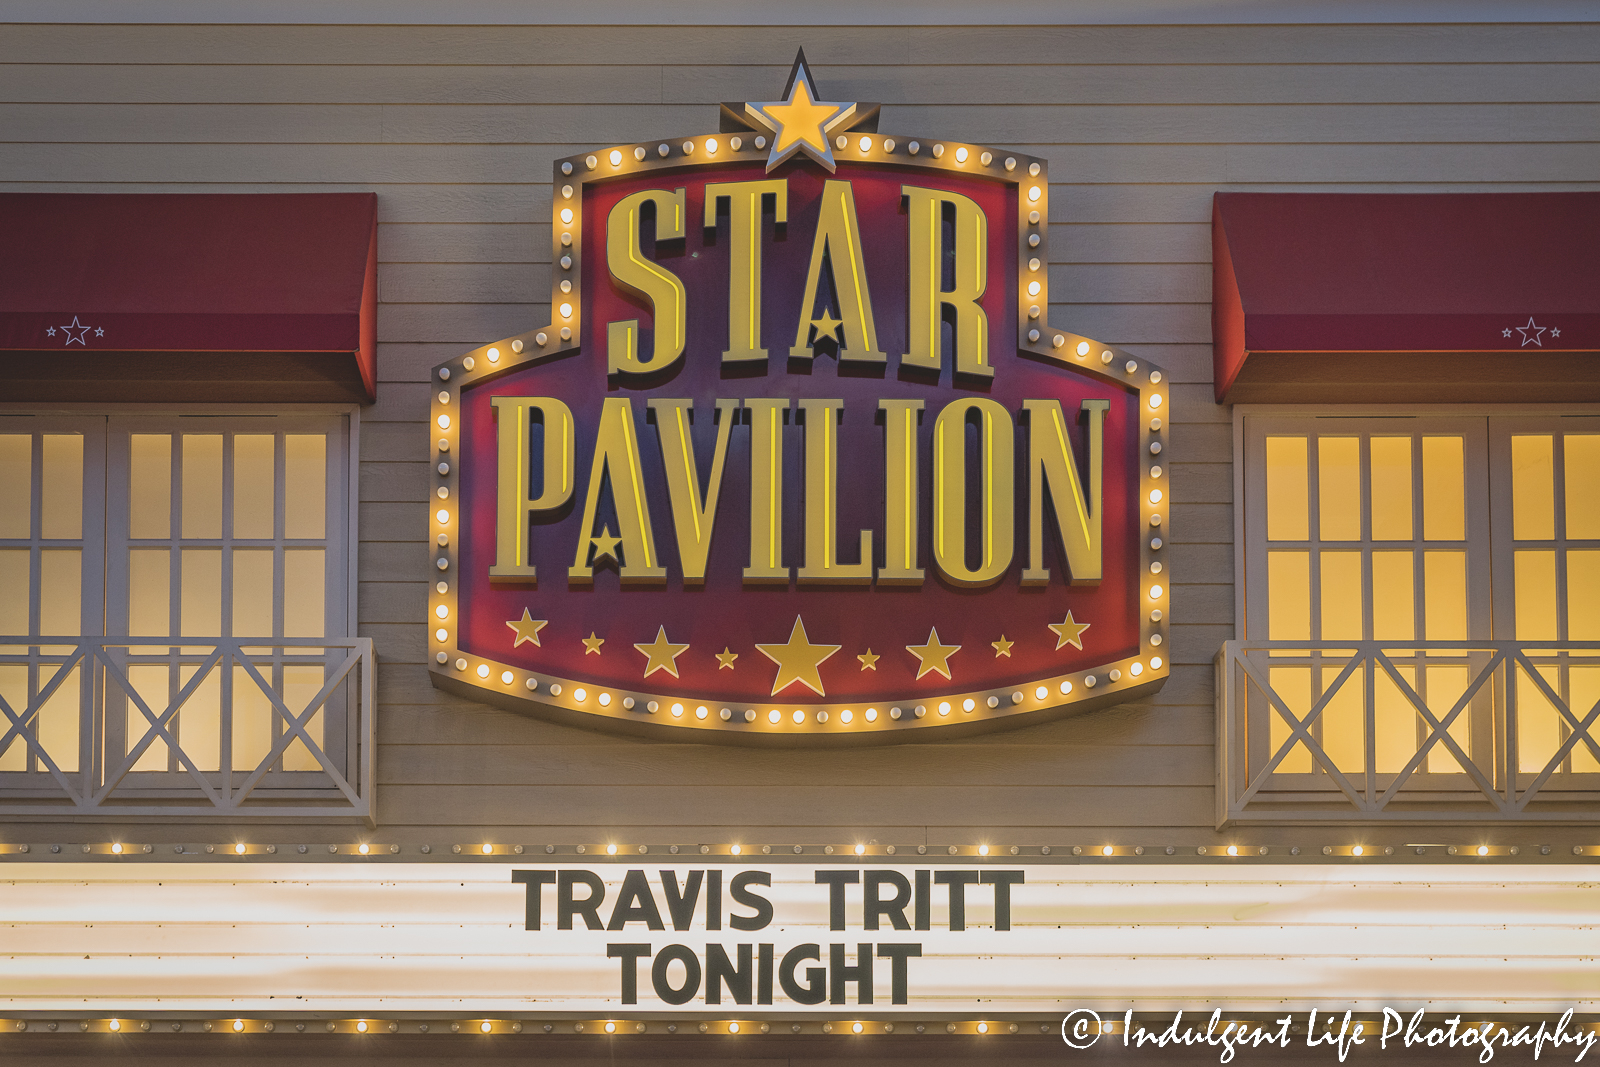 Star Pavilion marquee at Ameristar Casino in Kansas City, MO featuring Travis Tritt on December 10, 2022.